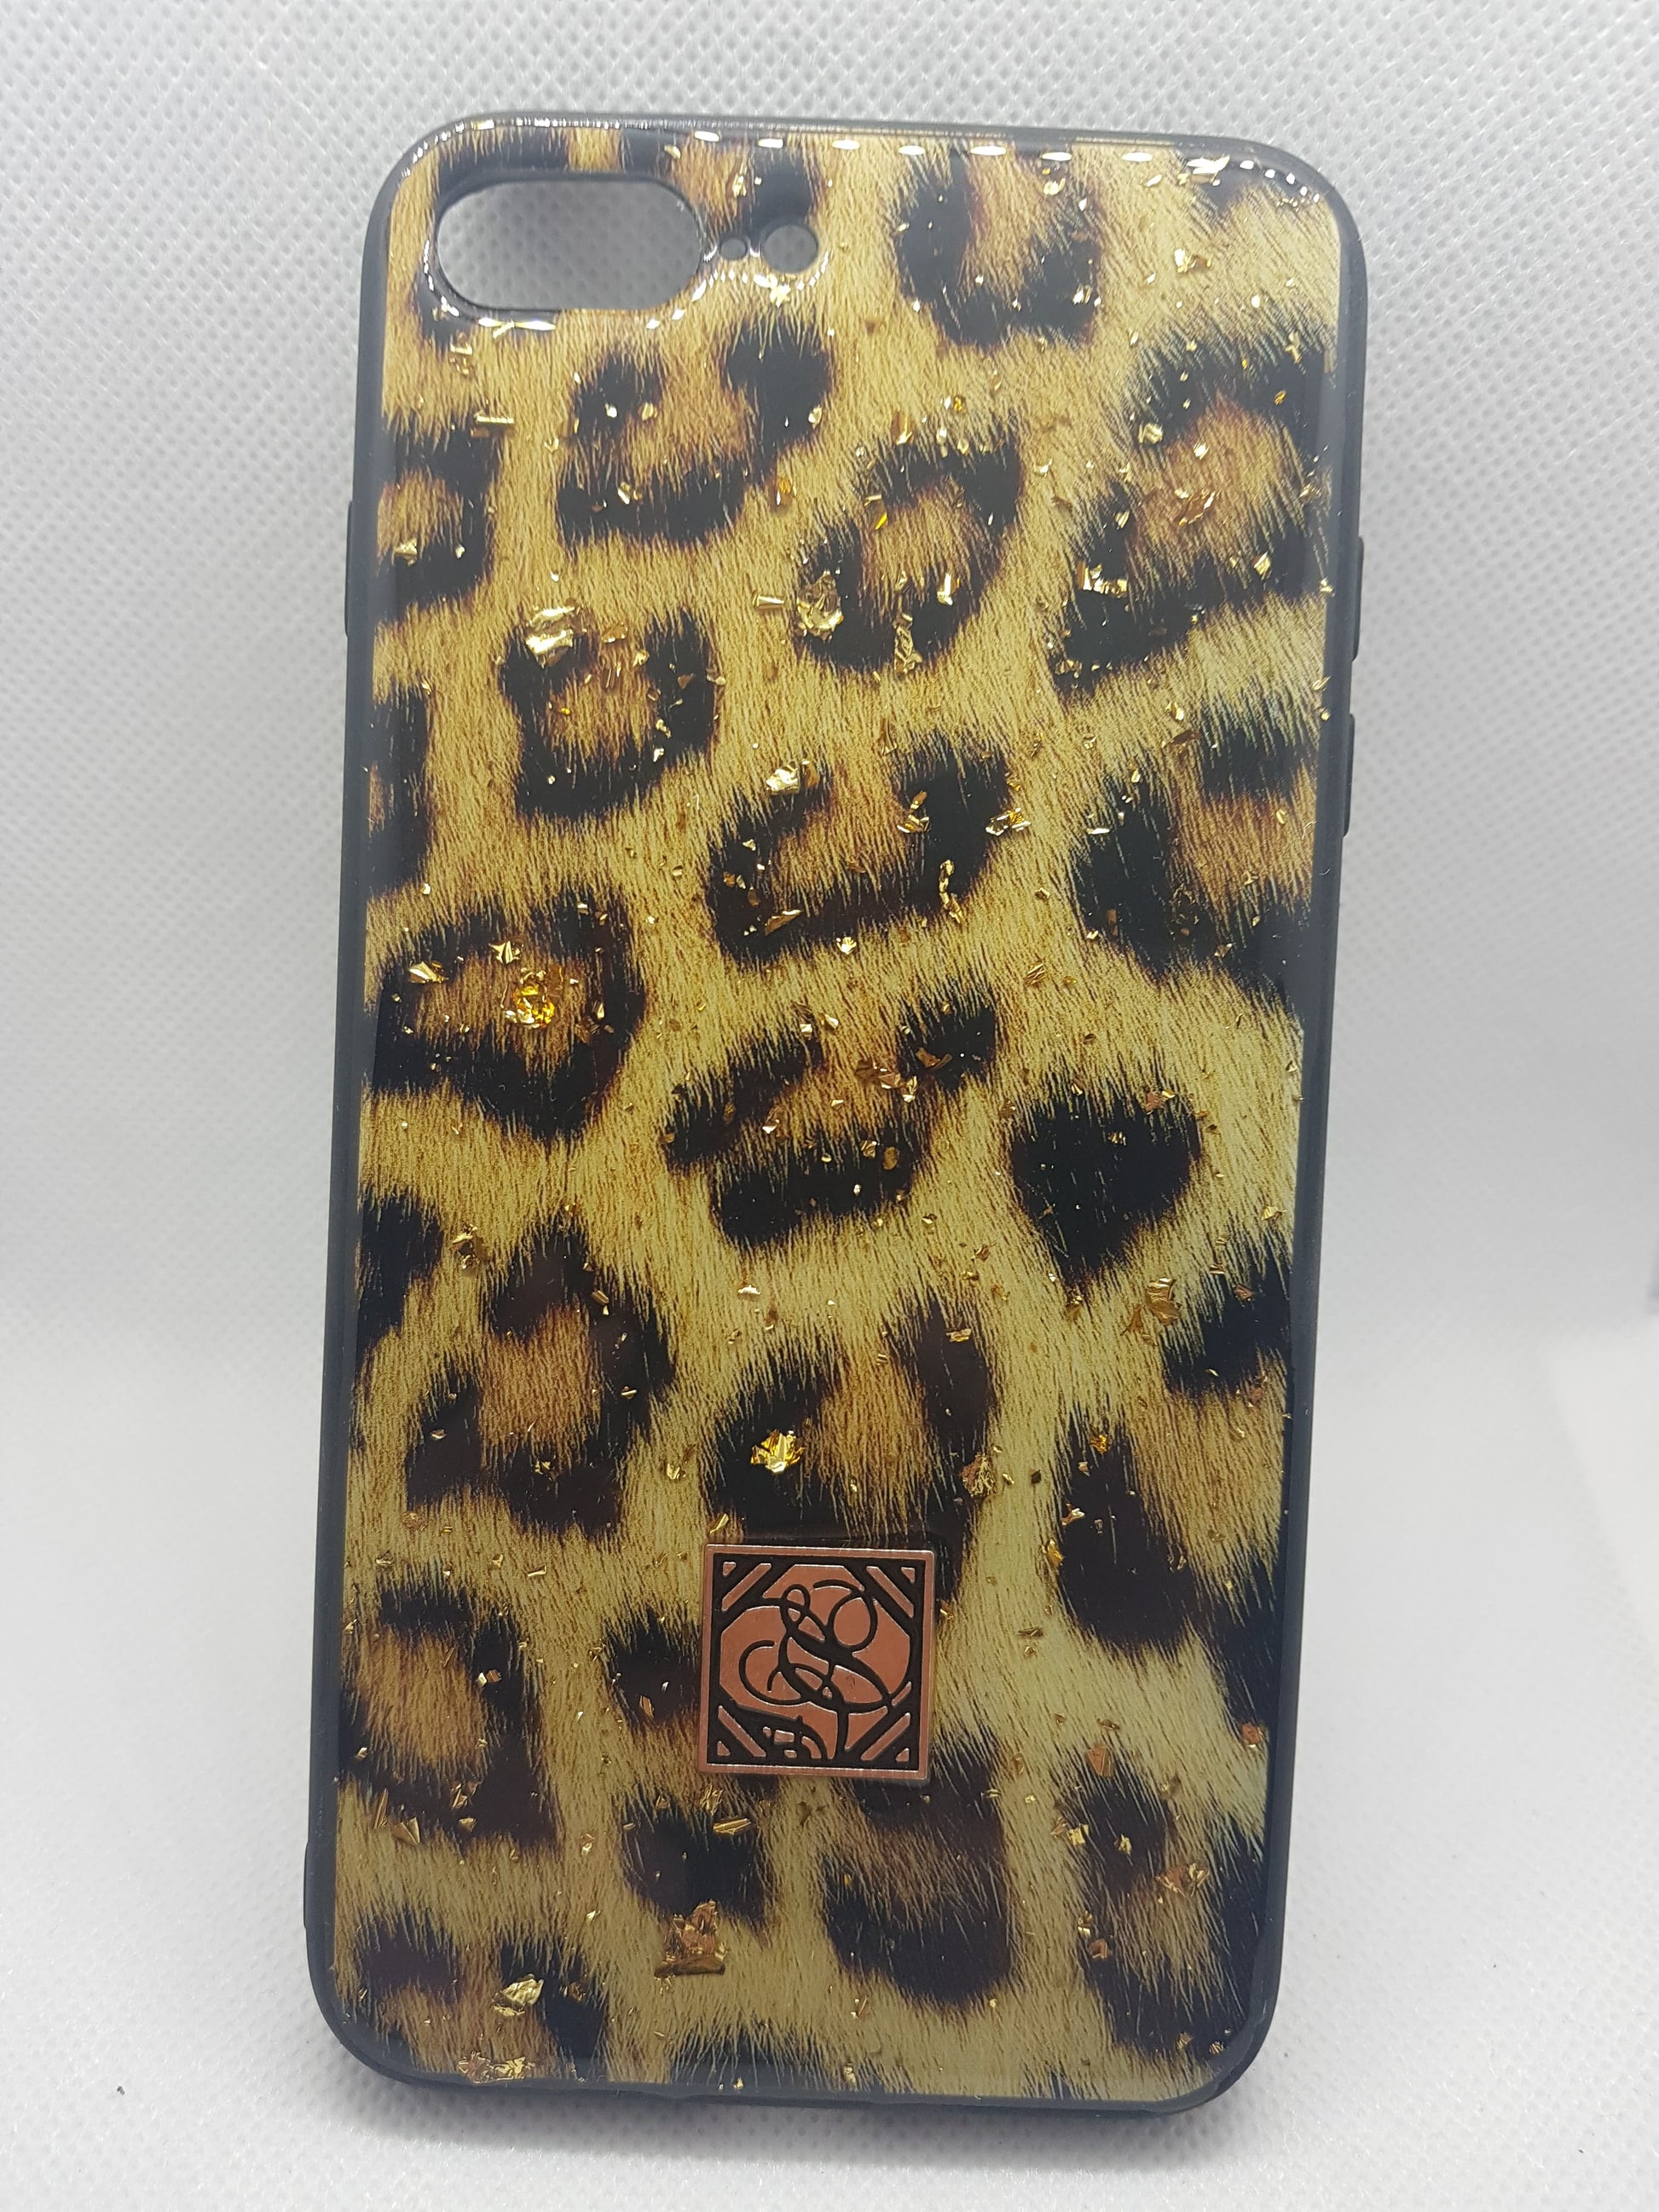 Materialisme meester struik iPhone 7 plus/ 8 Plus hoesje tijger luipaaar panter print case achterk –  David Telecom